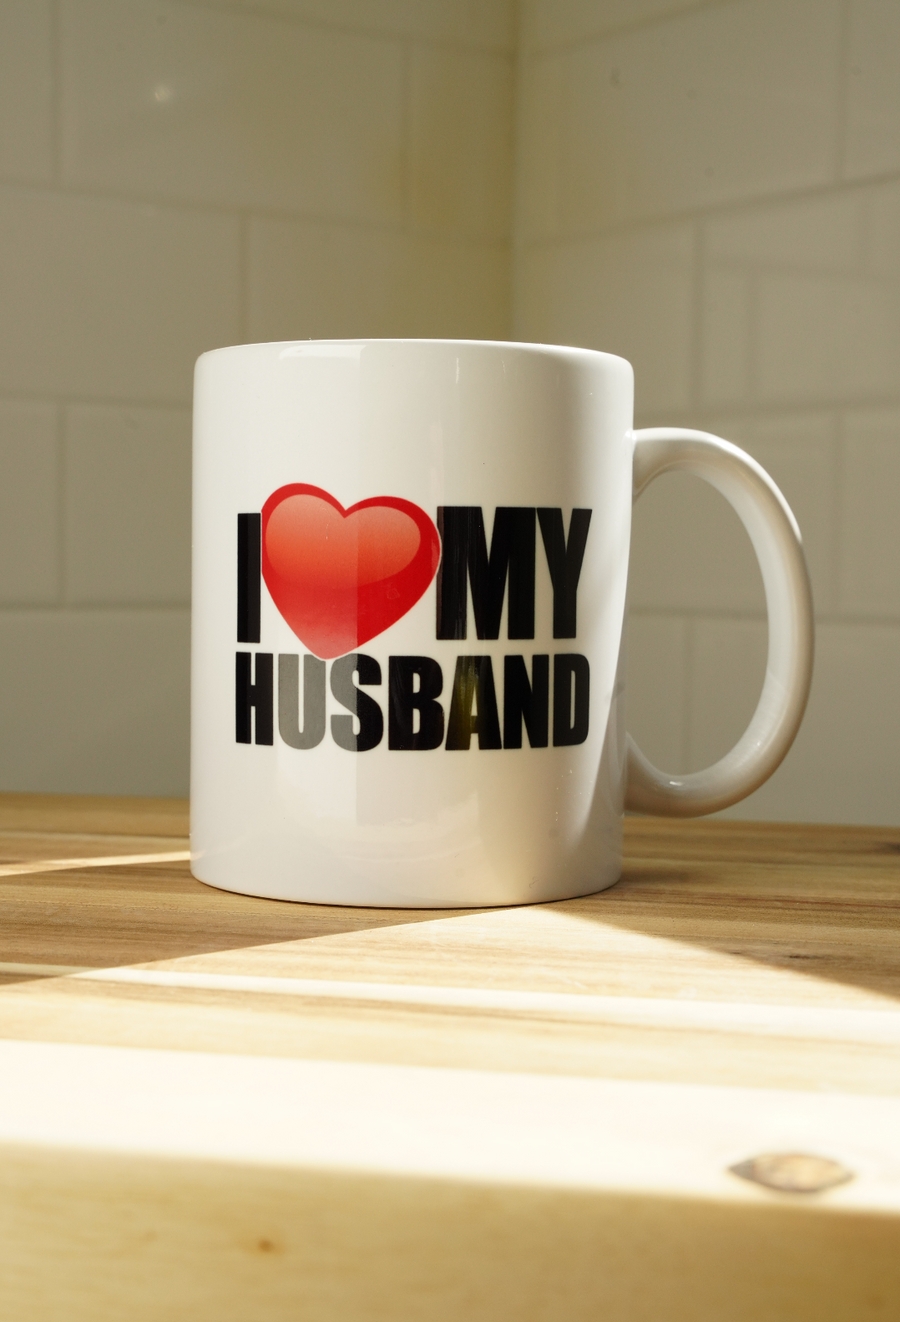 I Love My Husband Mug